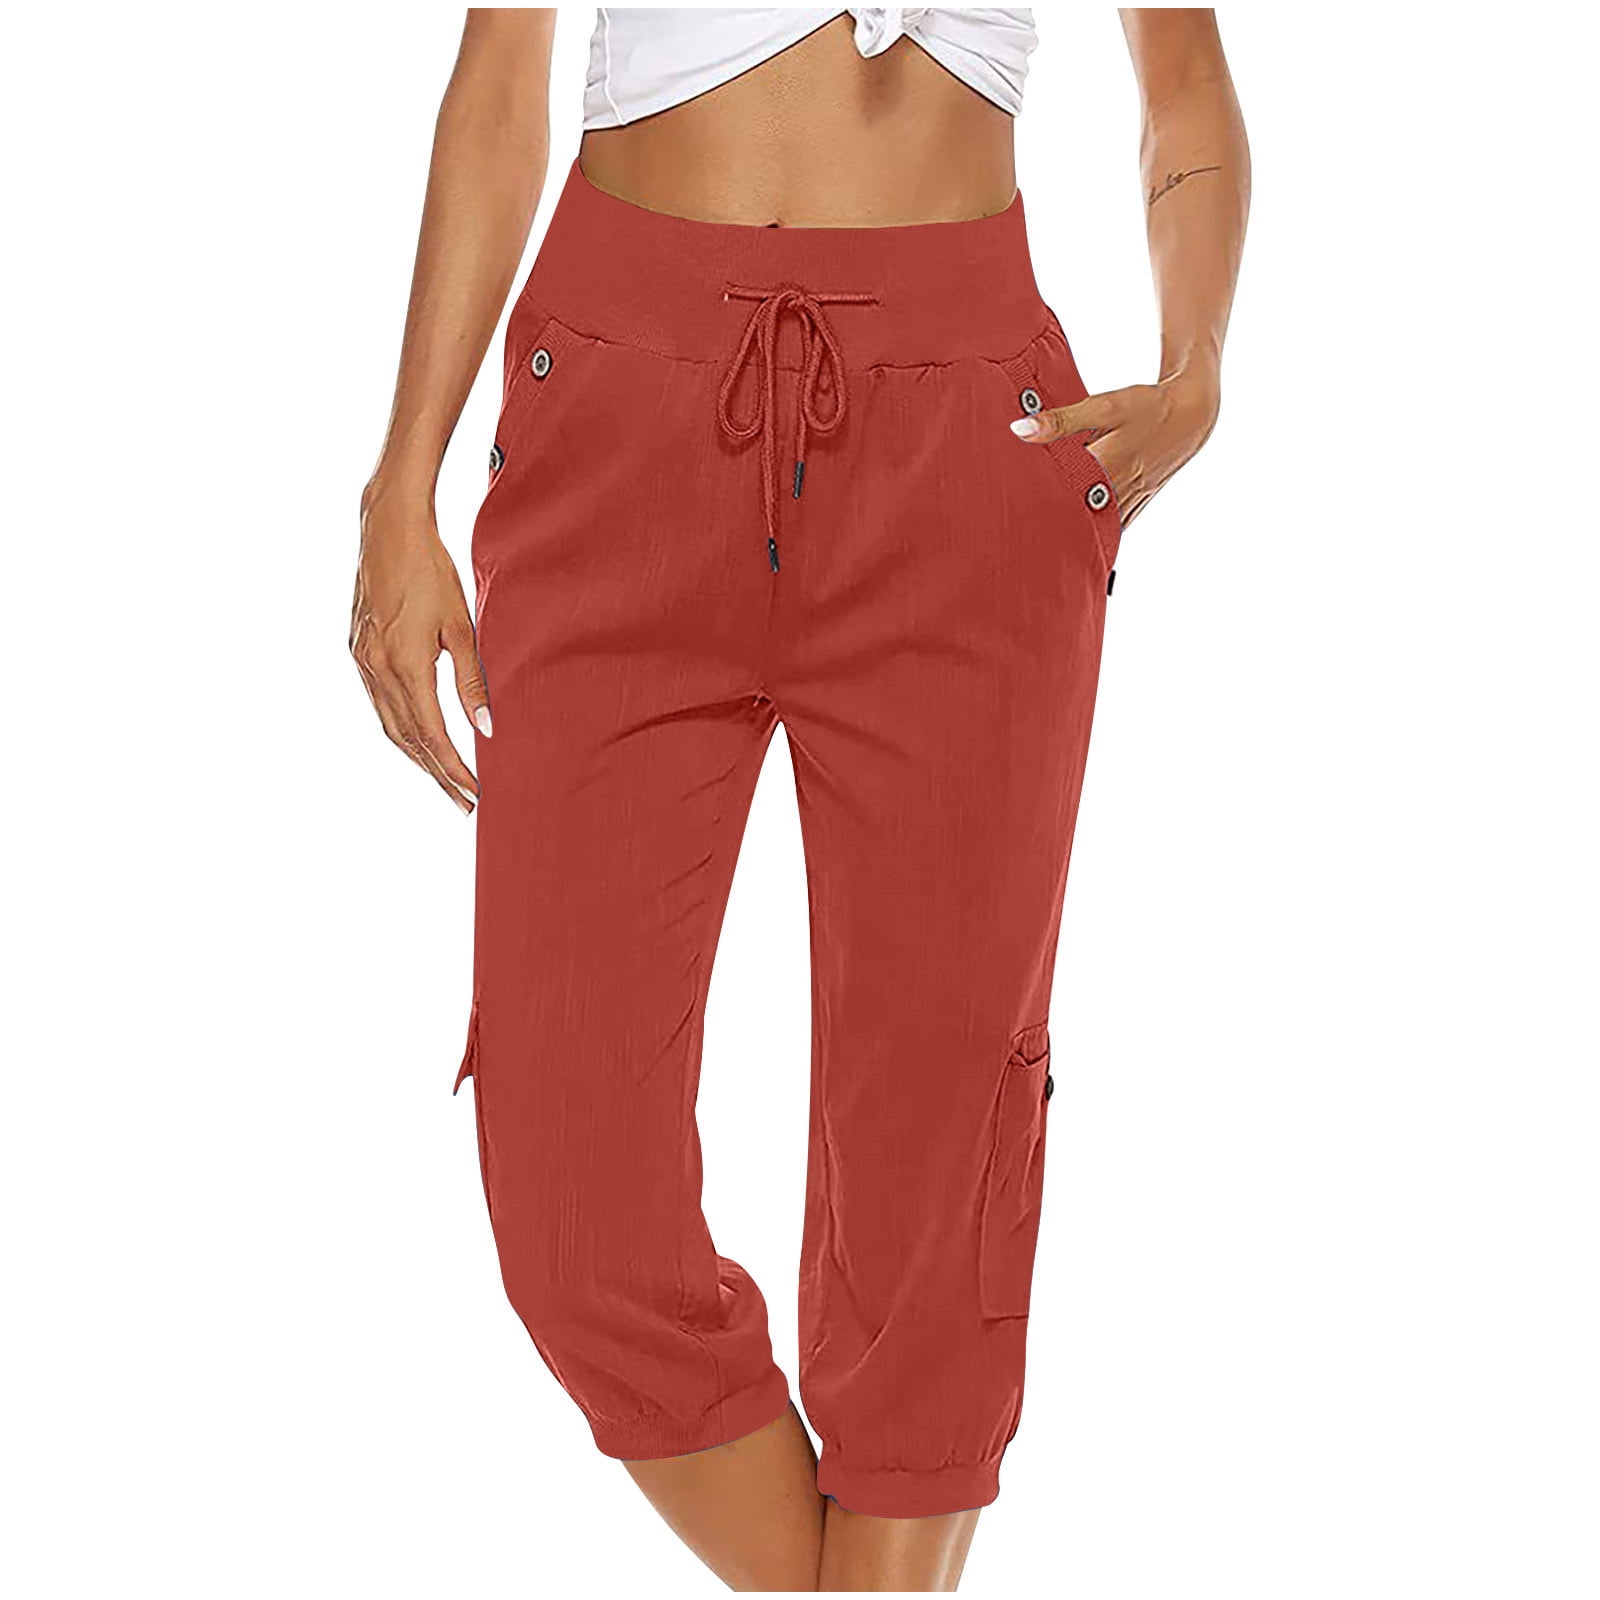 Capri Pants for Women Cotton Linen Plus Size Cargo Pants Capris Elastic  High Waisted 3/4 Slacks with Multi Pockets (Large, GrayB)